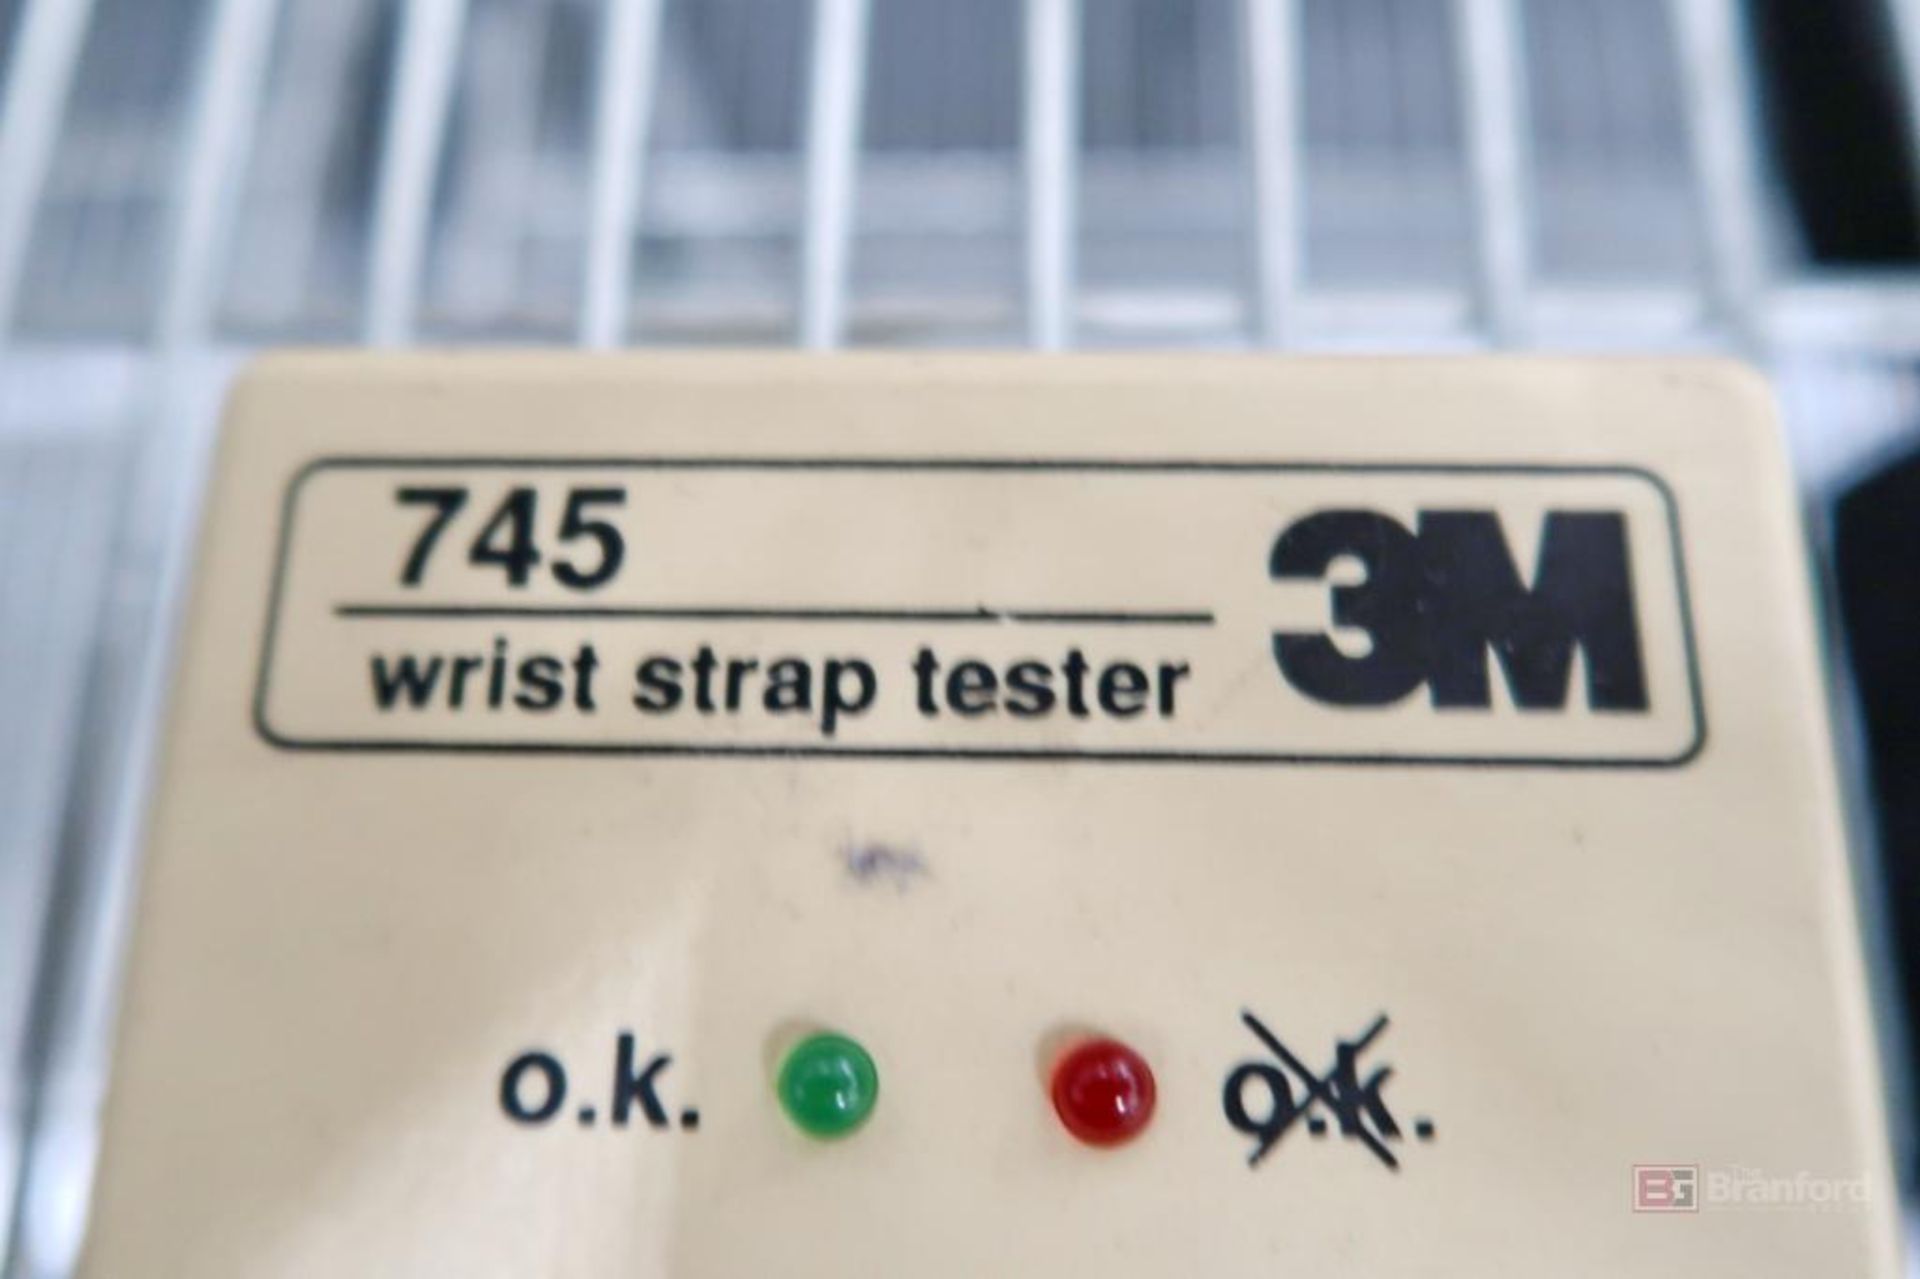 3M 745 wrist strap tester - Image 2 of 2